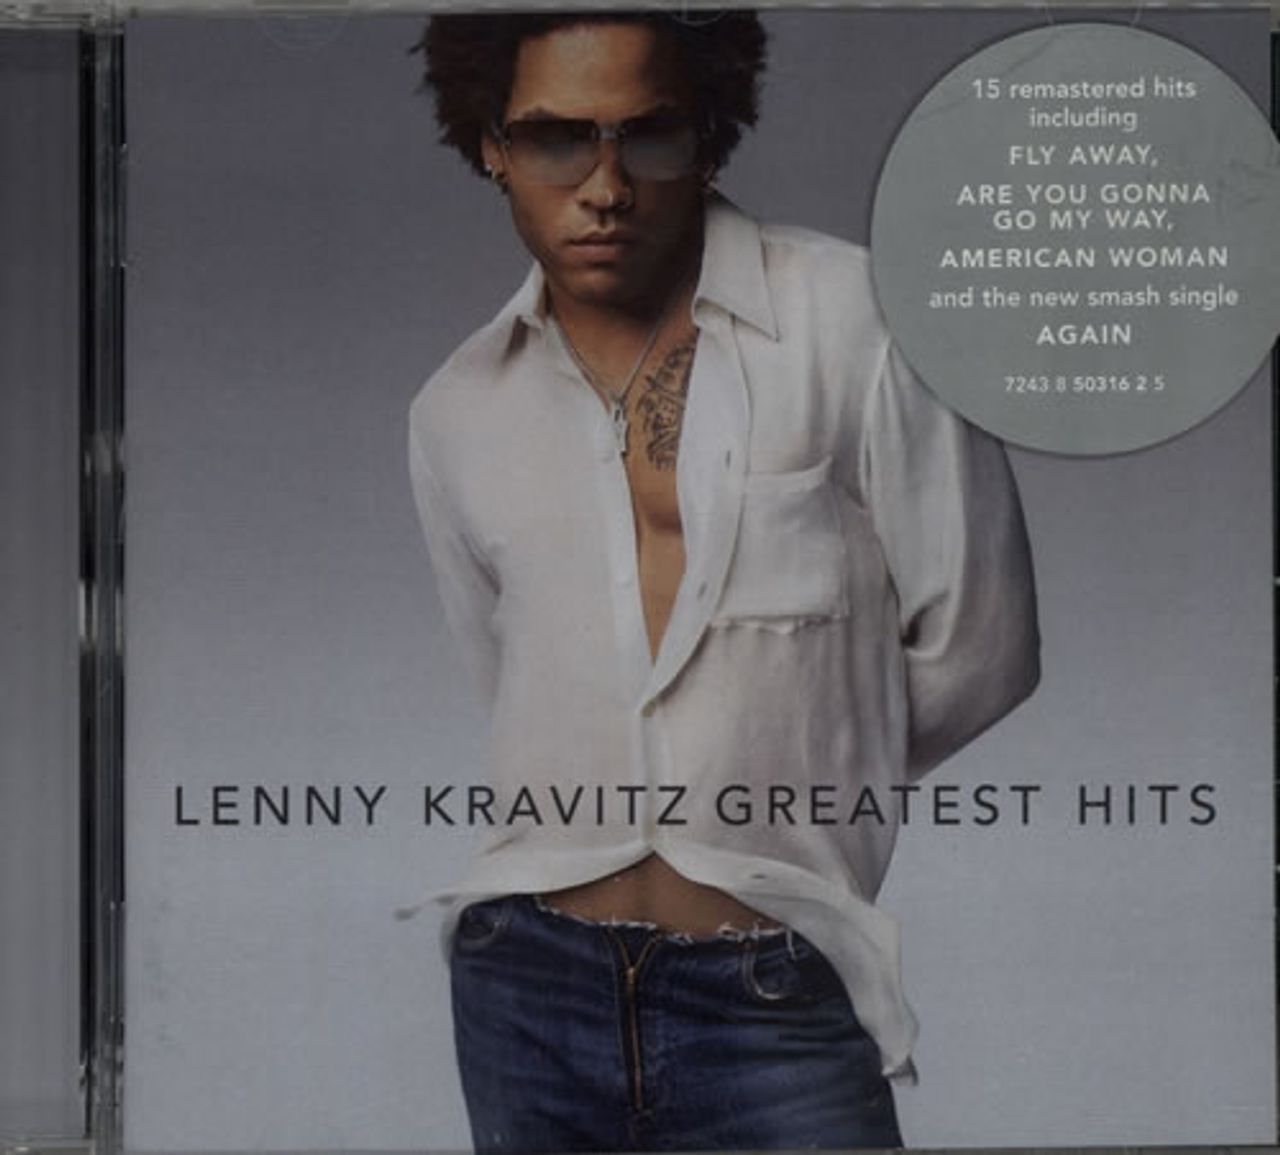 Lenny Kravitz Greatest Hits Australian CD album — RareVinyl.com